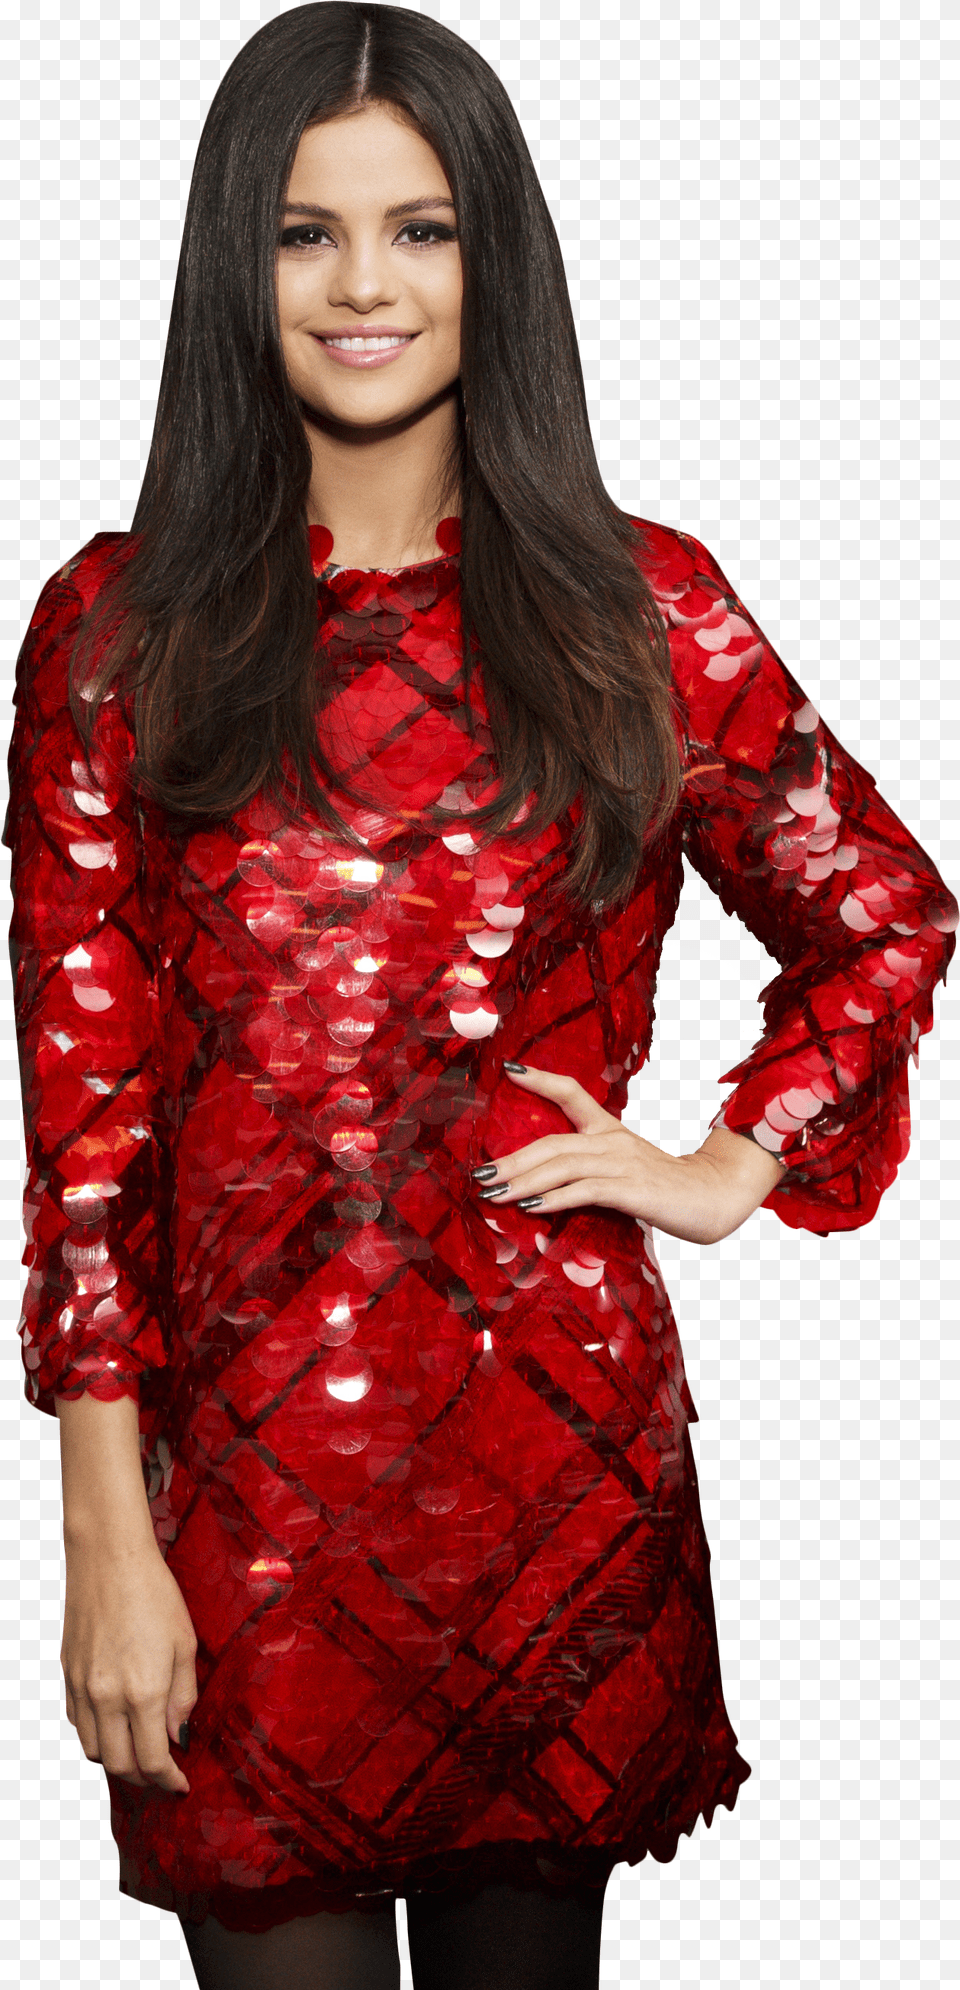 Selena Gomez In Red Dress And Black Pantyhose Selena Gomez Kiss Radio Free Png Download